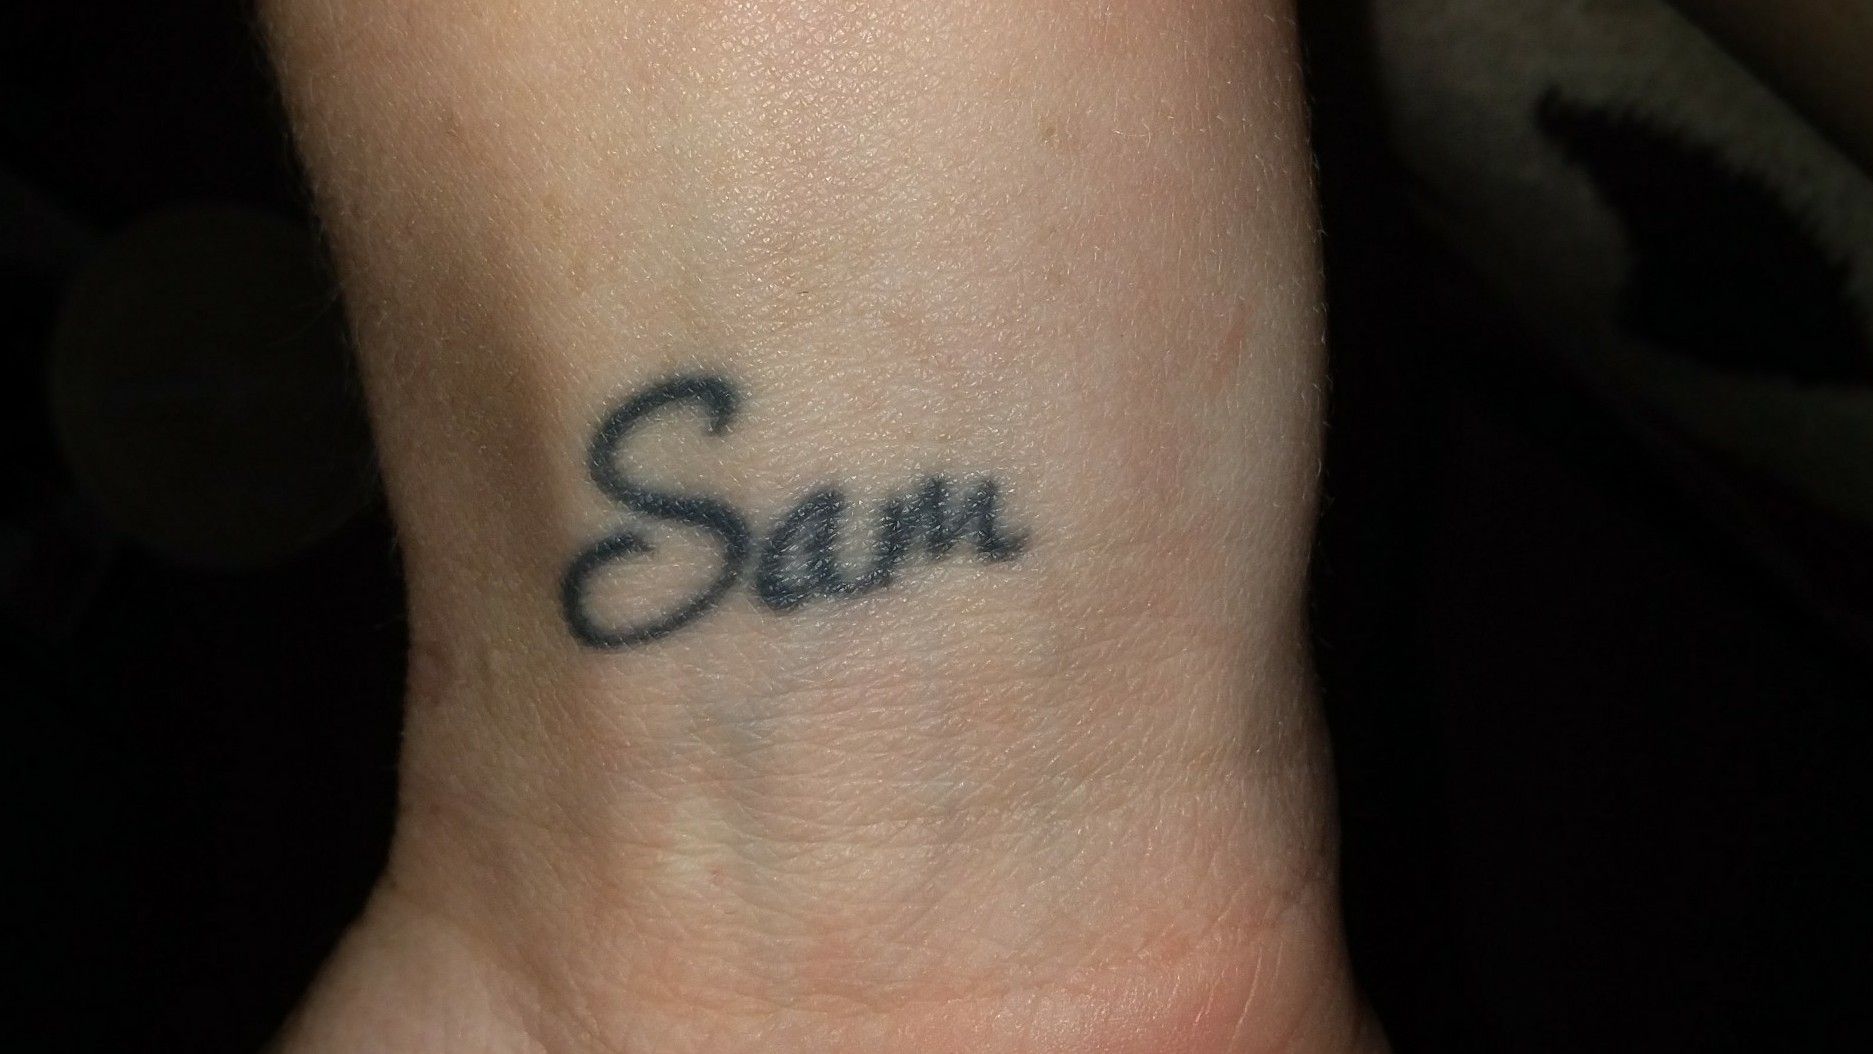 Sam Name Tattoo Designs